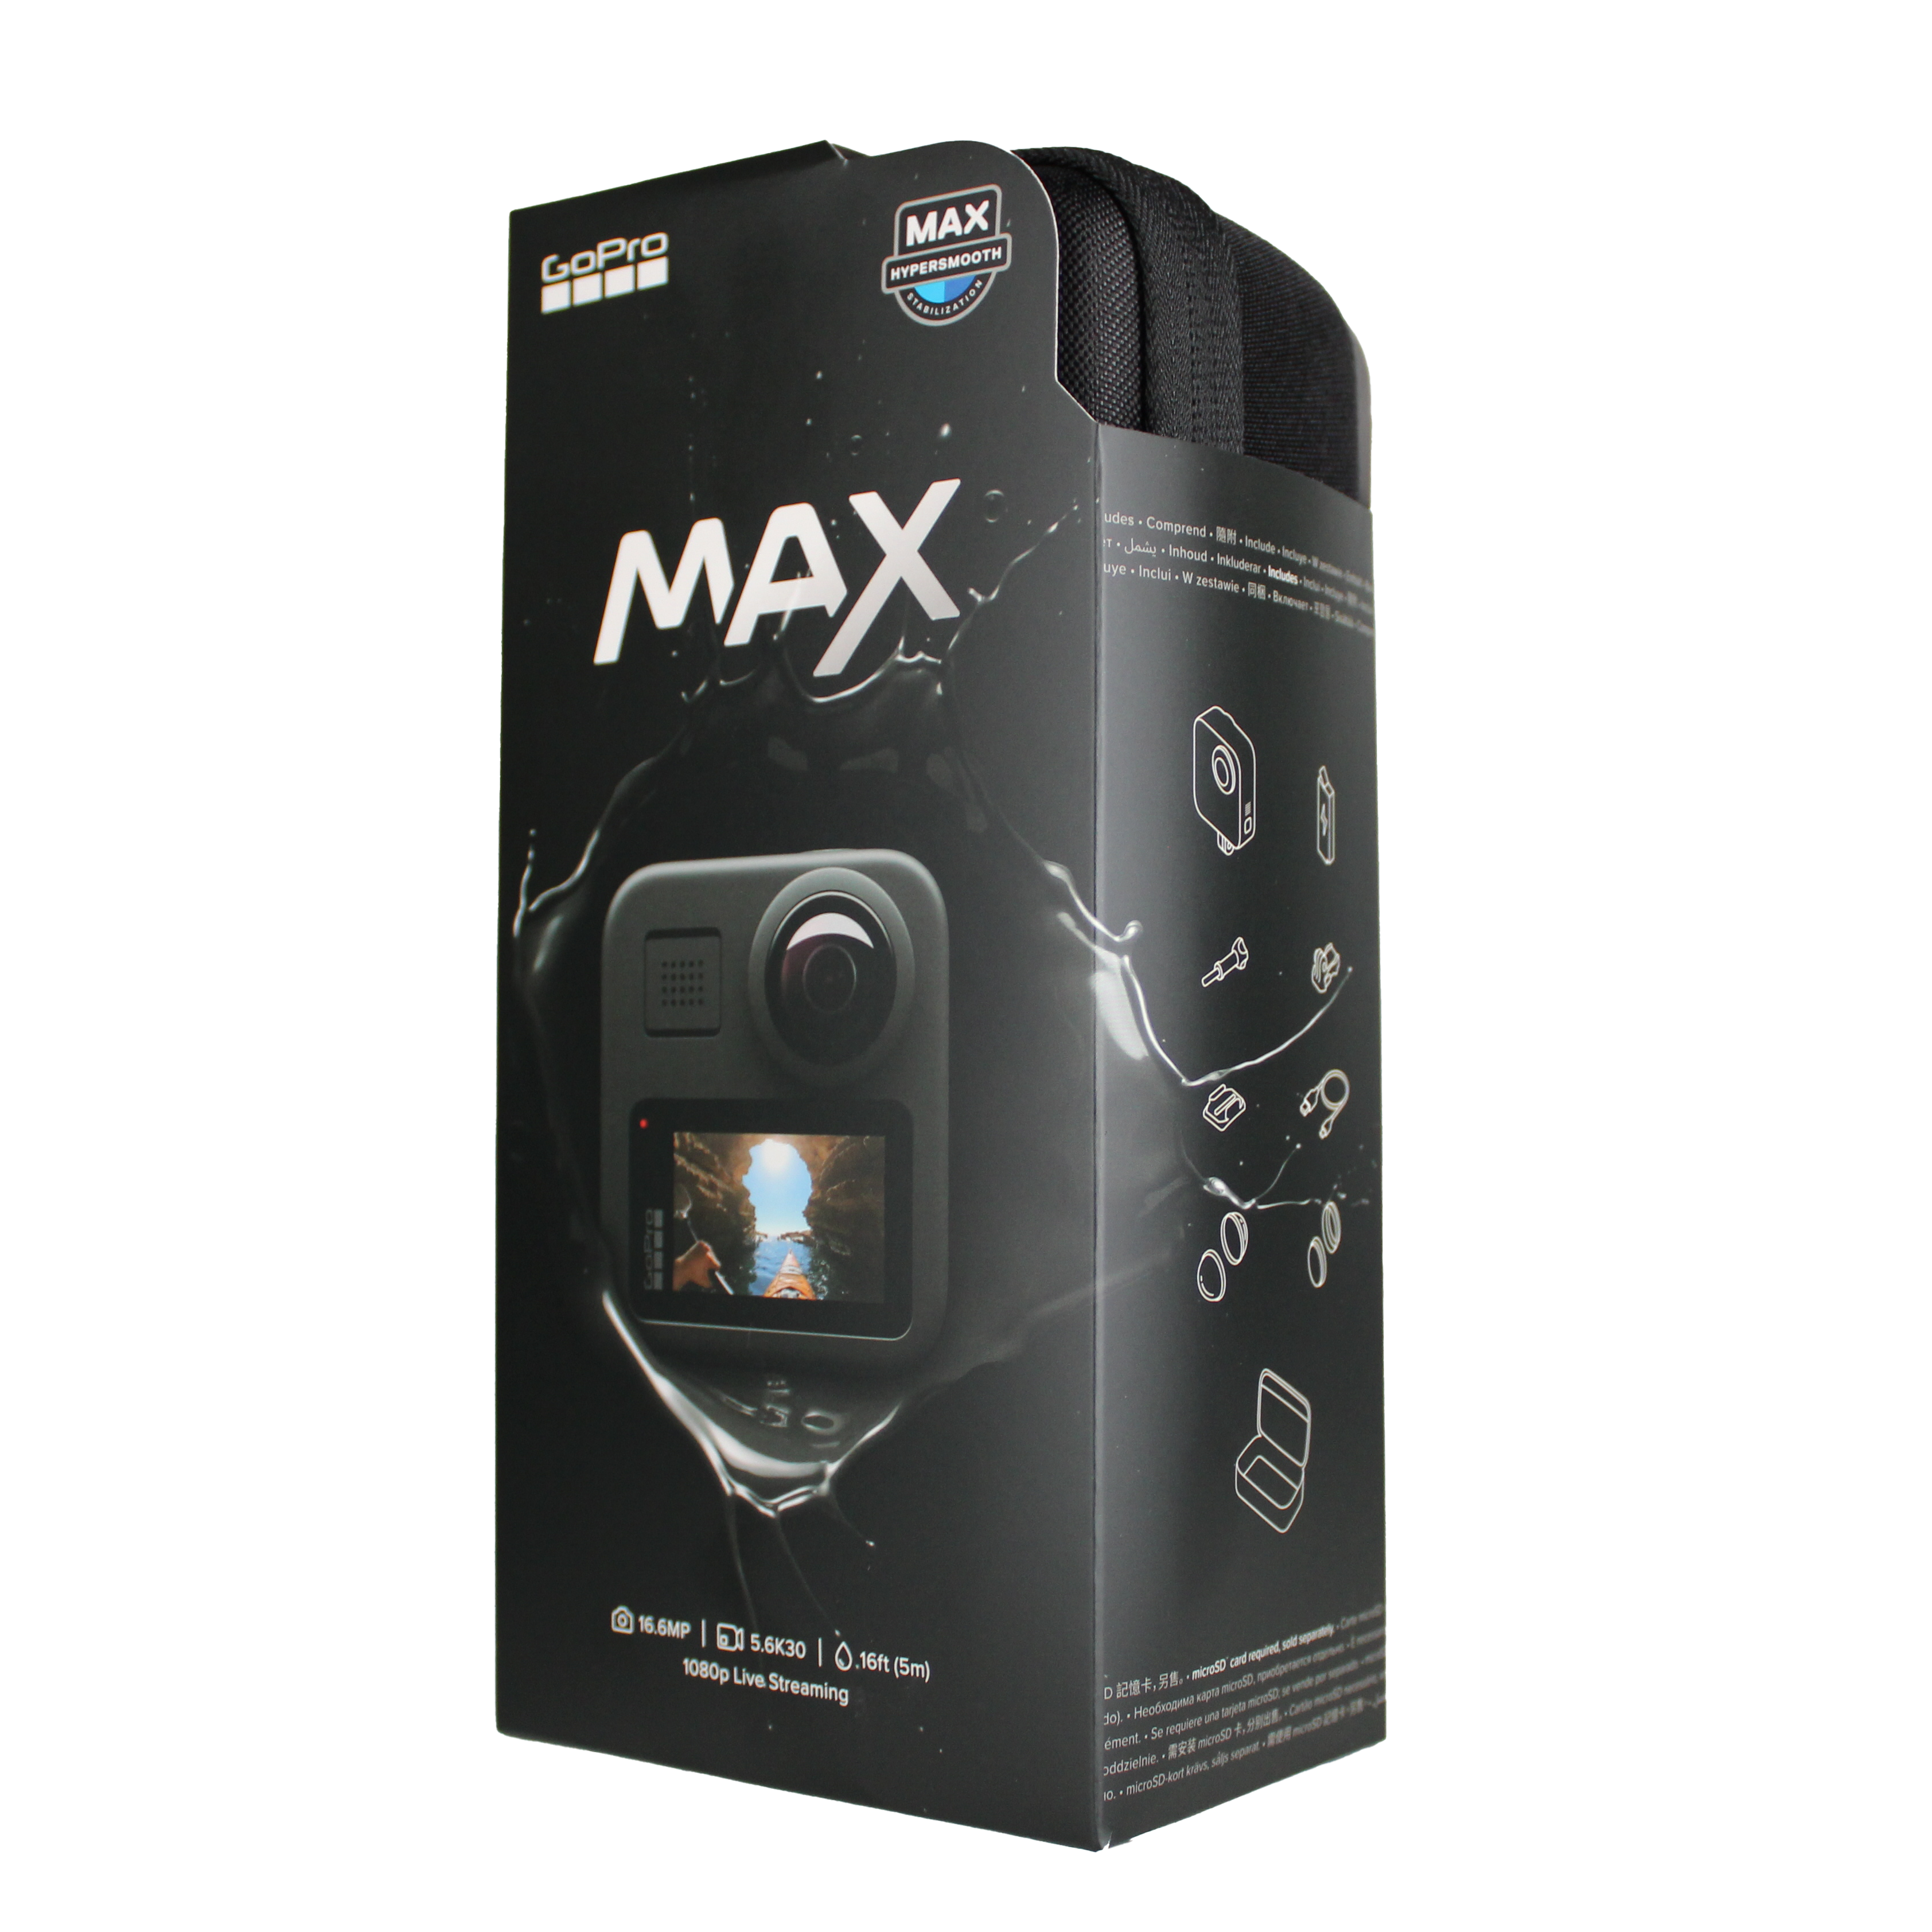 GoPro MAX 360 (CHDHZ-201)